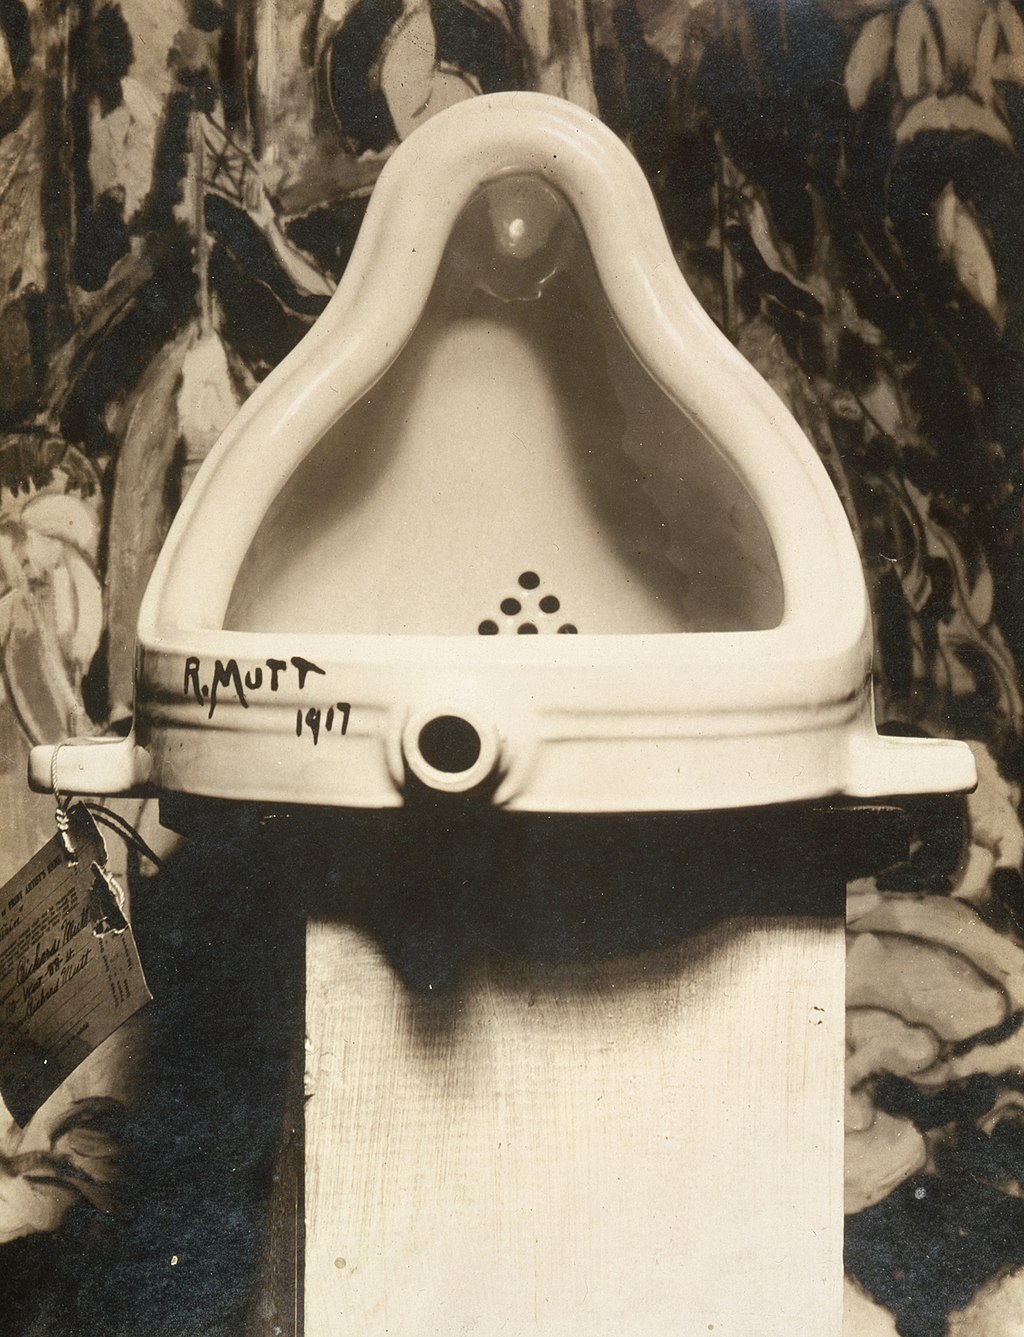 Marcel Duchamp’s “Fountain” (1917)